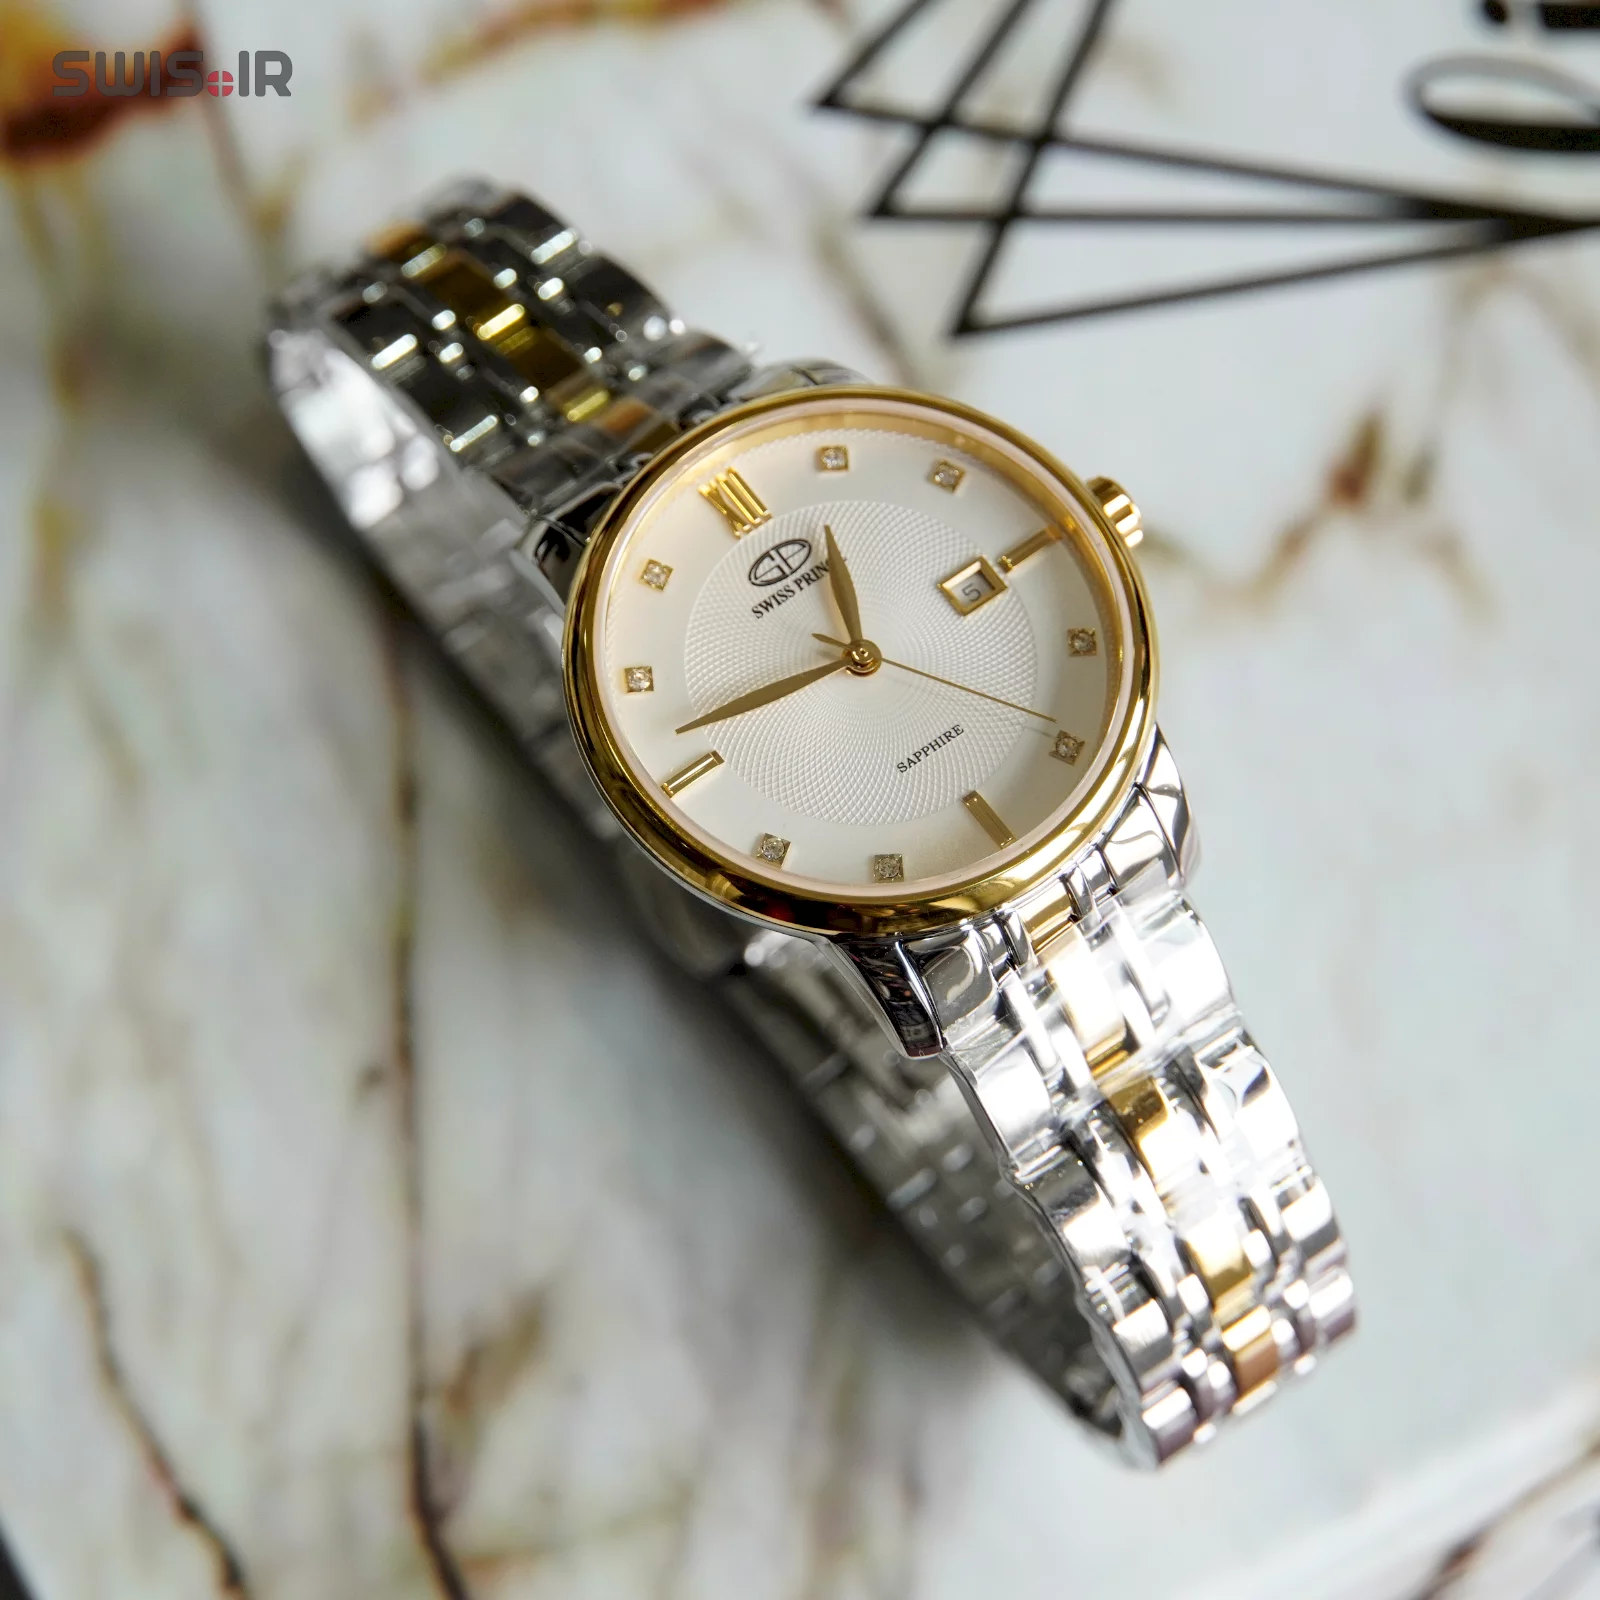 ساعت مچی زنانه برند سوئیس پرینس مدل MC-GOLD-818-L